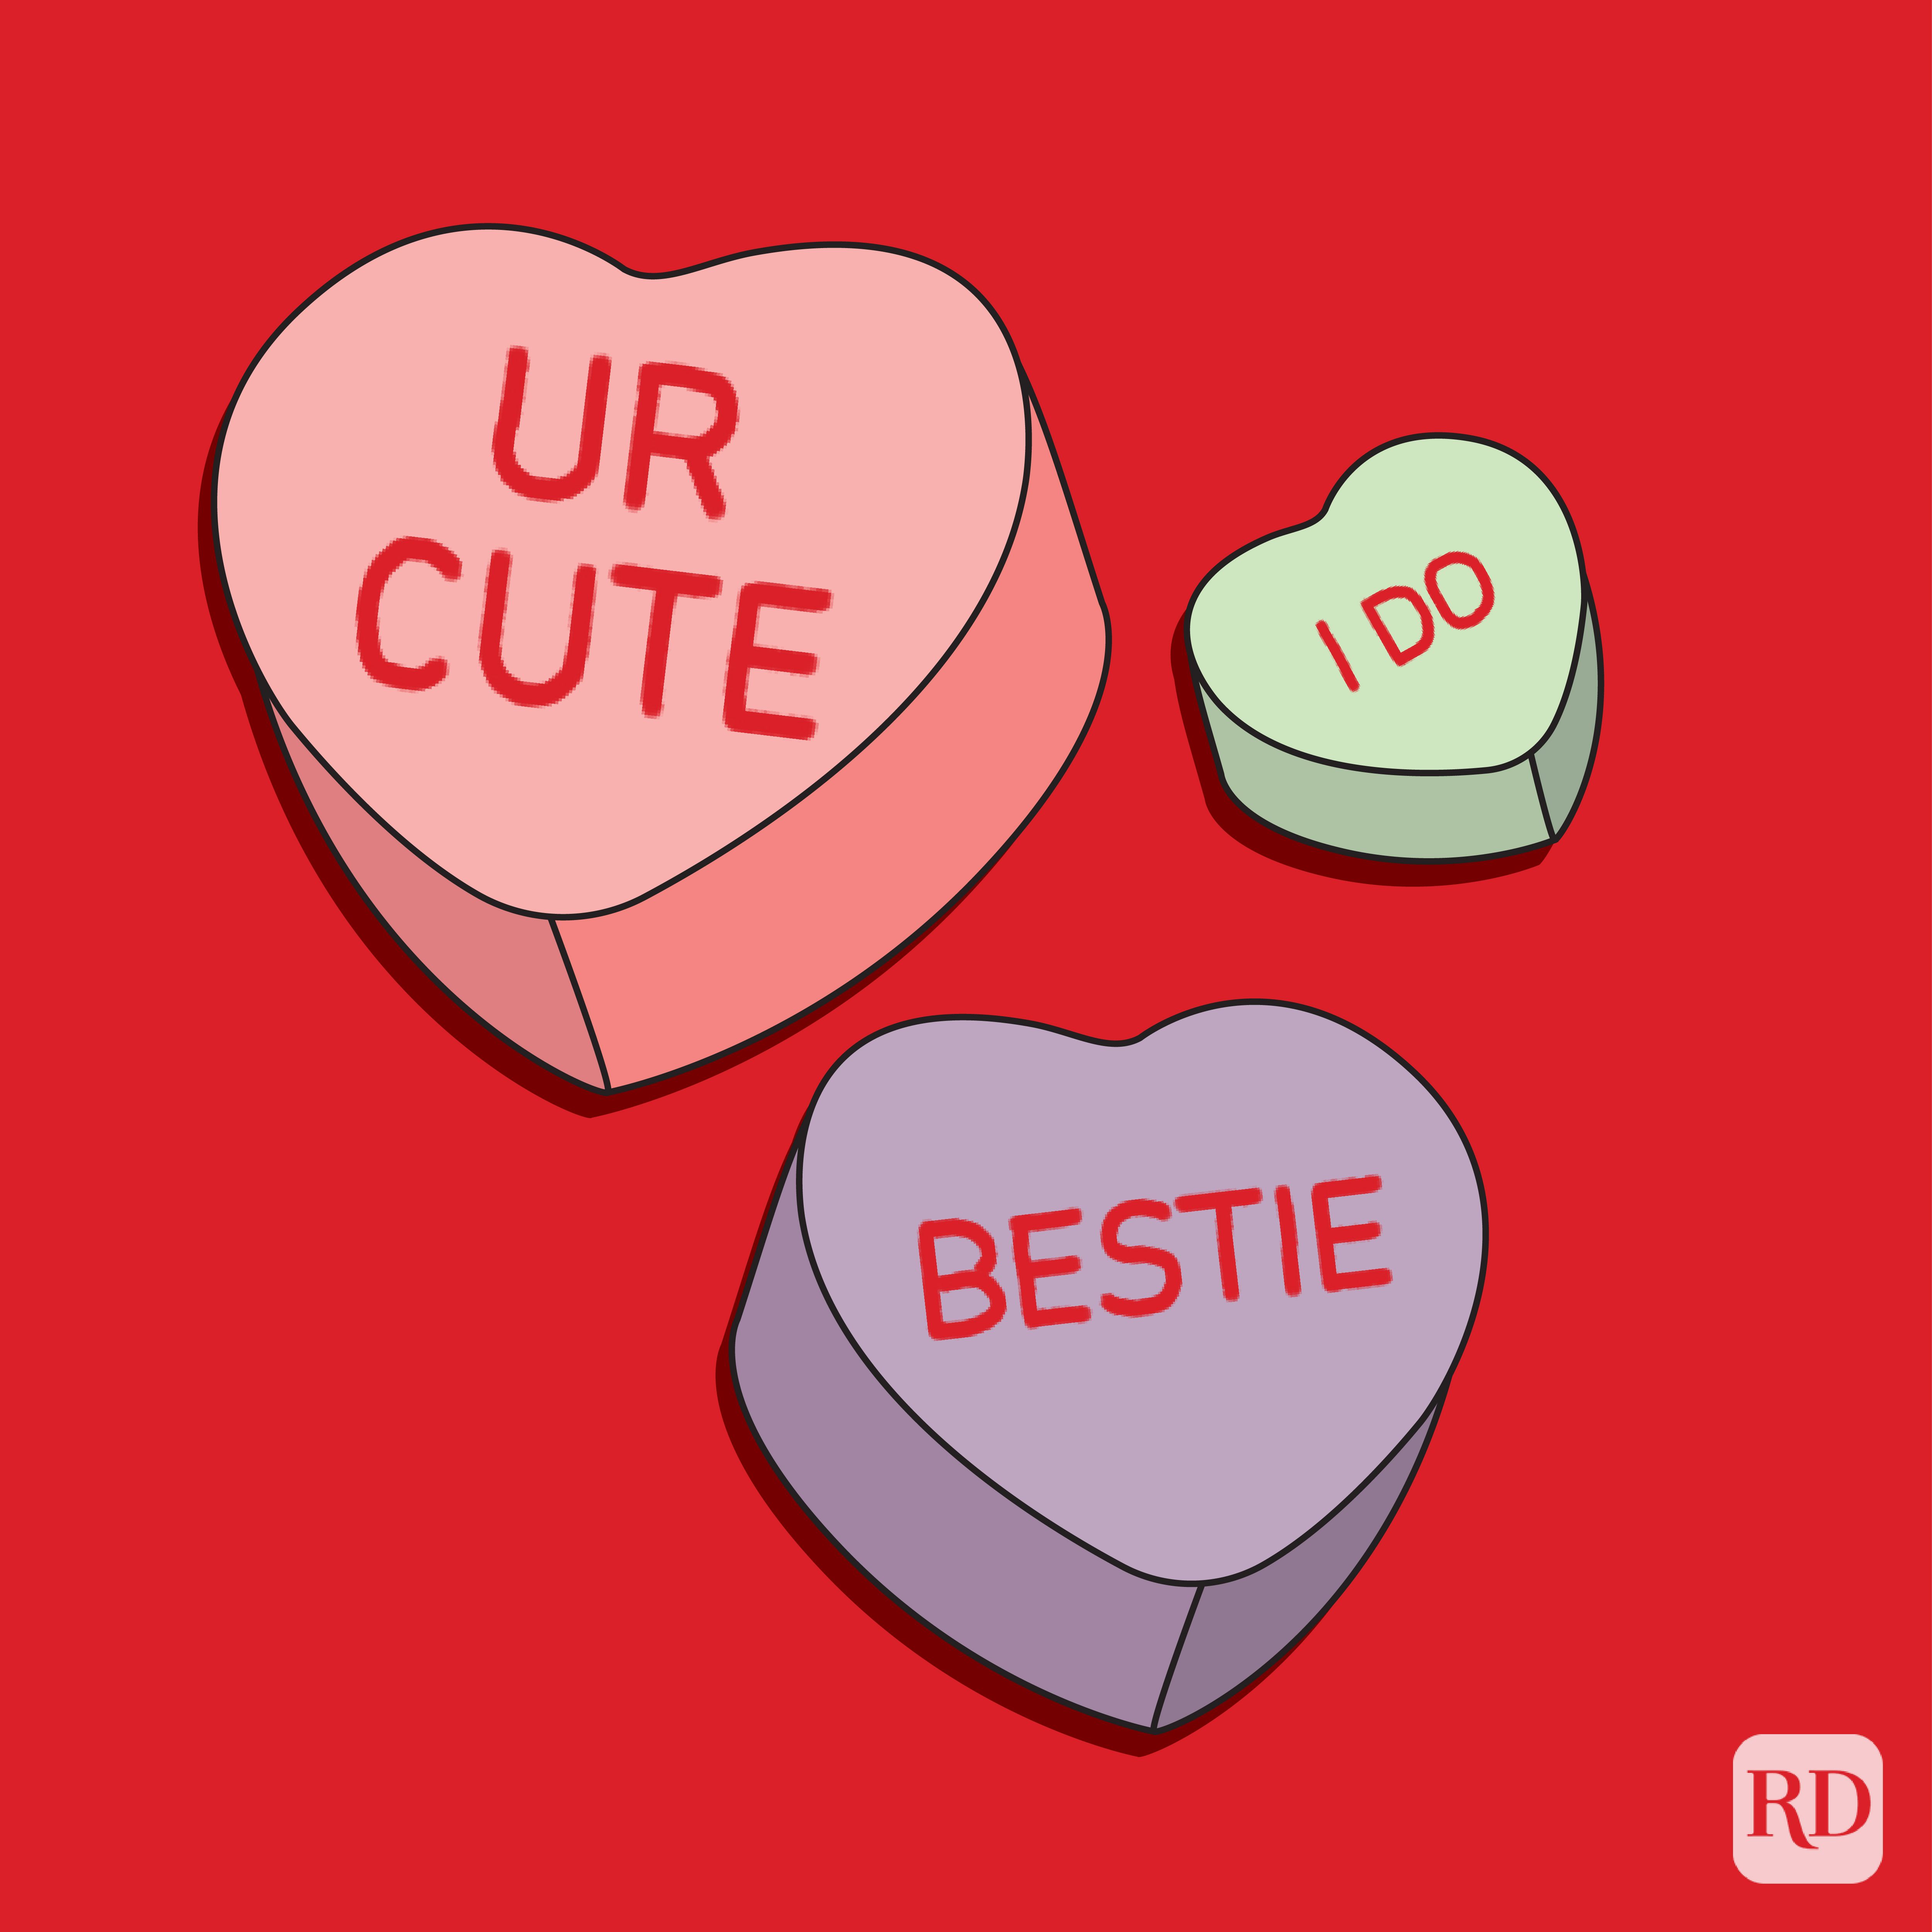 Brach's Tiny Conversation Hearts Valentine's Candy - Shop Candy at H-E-B